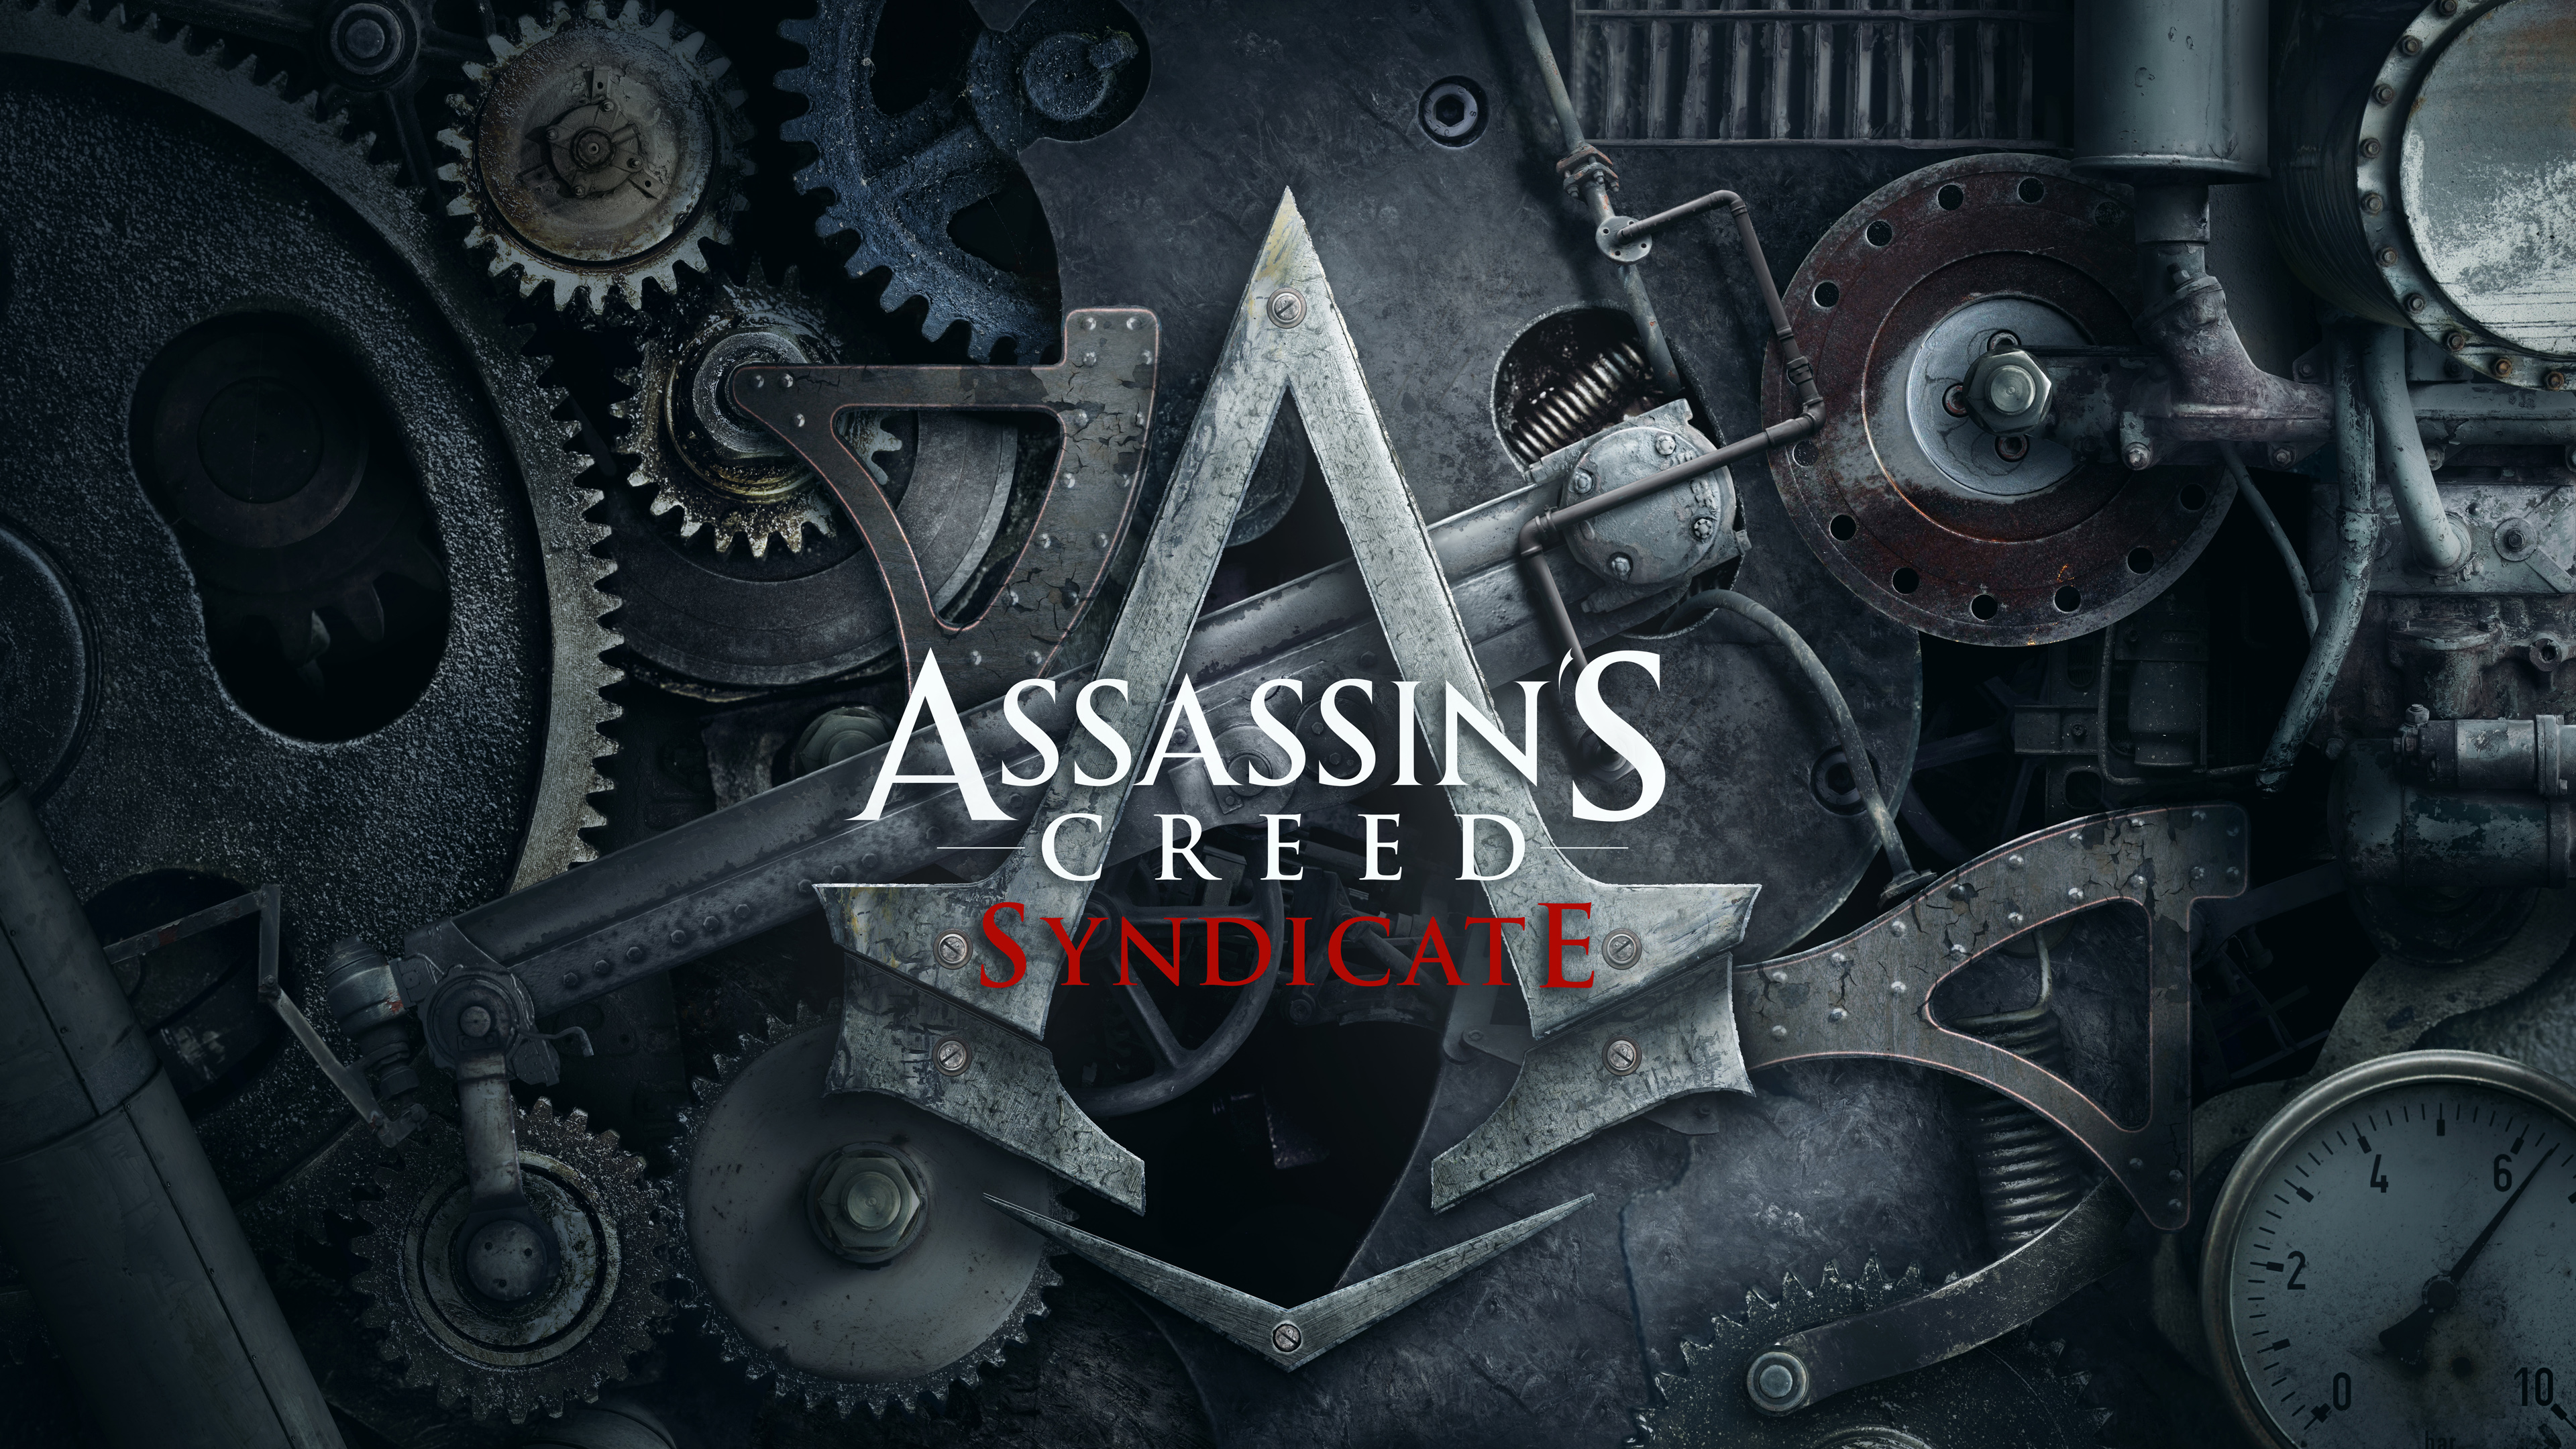 assassins creed syndicate logo 1535966575 - Assassins Creed Syndicate Logo - xbox games wallpapers, ps games wallpapers, pc games wallpapers, games wallpapers, assassins creed wallpapers